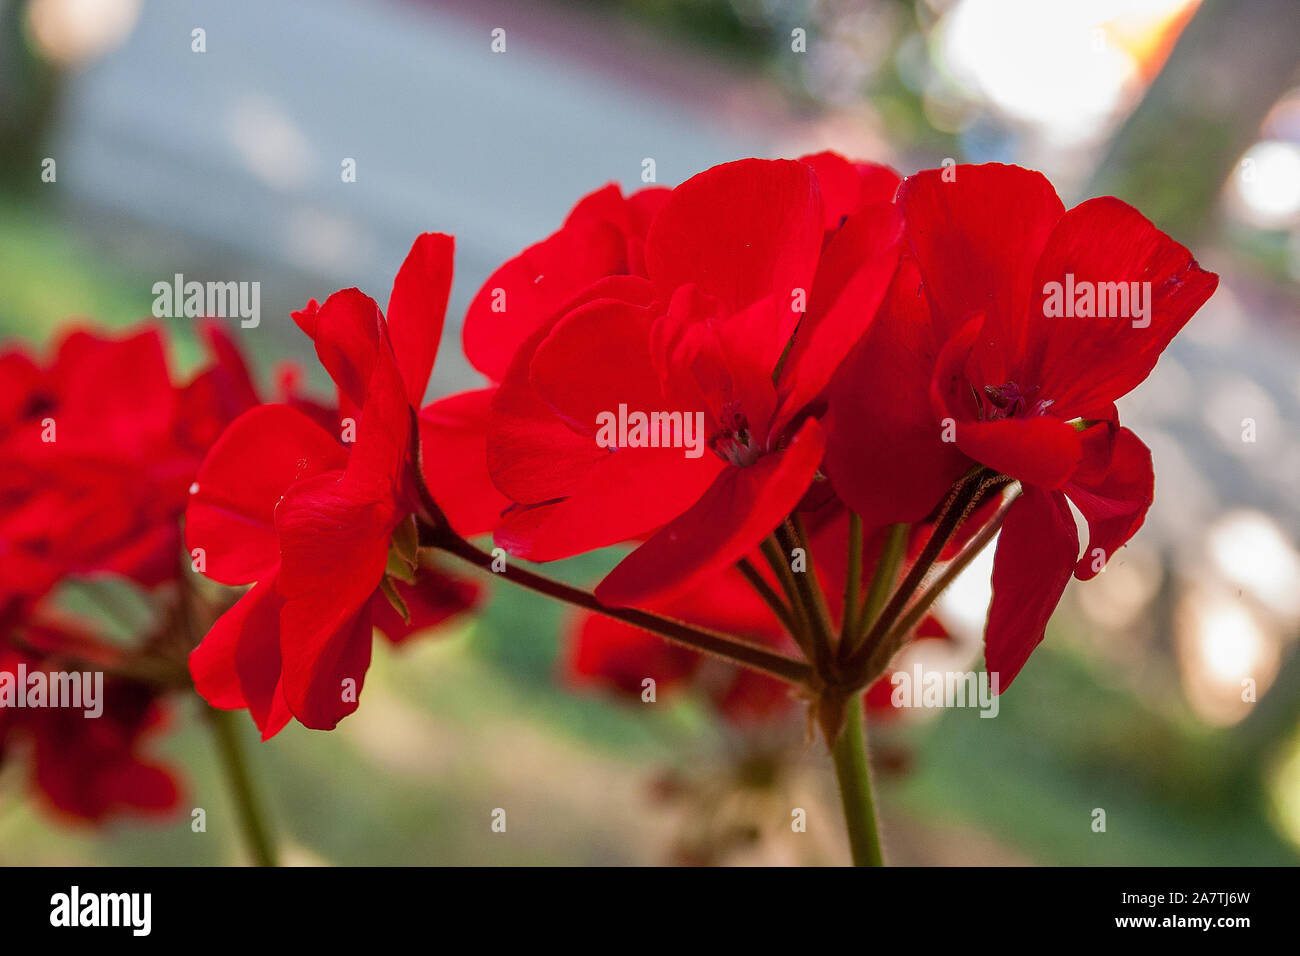 Closeup photo of red Geranium flowers. Stock Photo